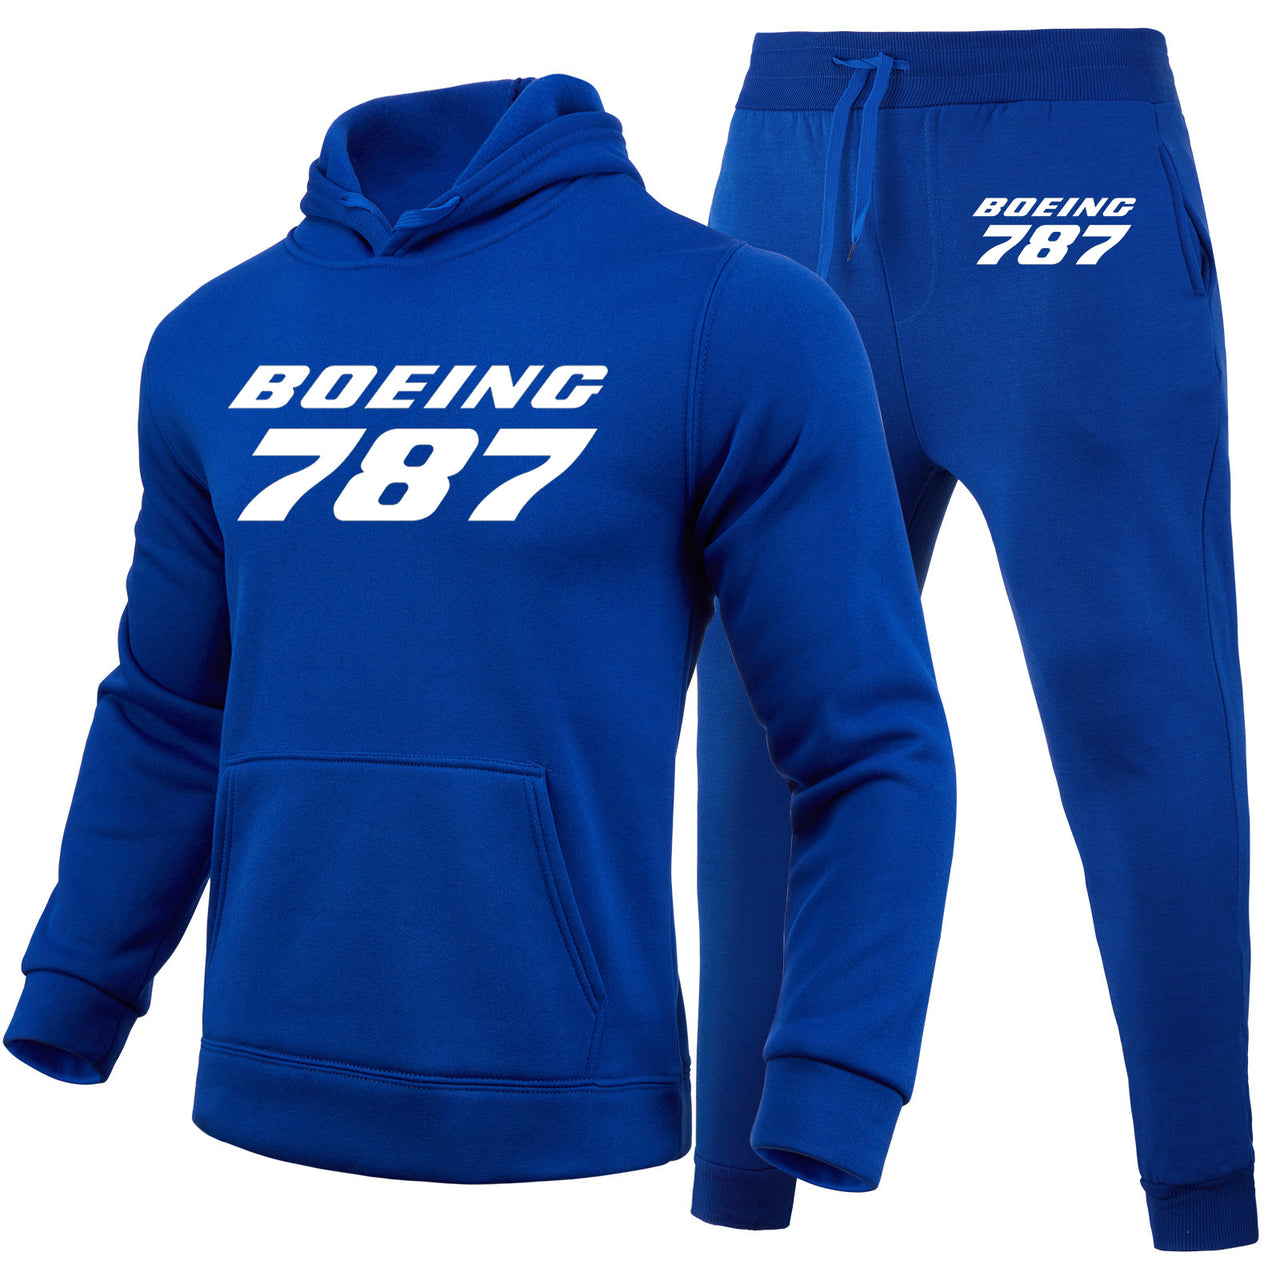 Boeing 787 & Text Designed Hoodies & Sweatpants Set